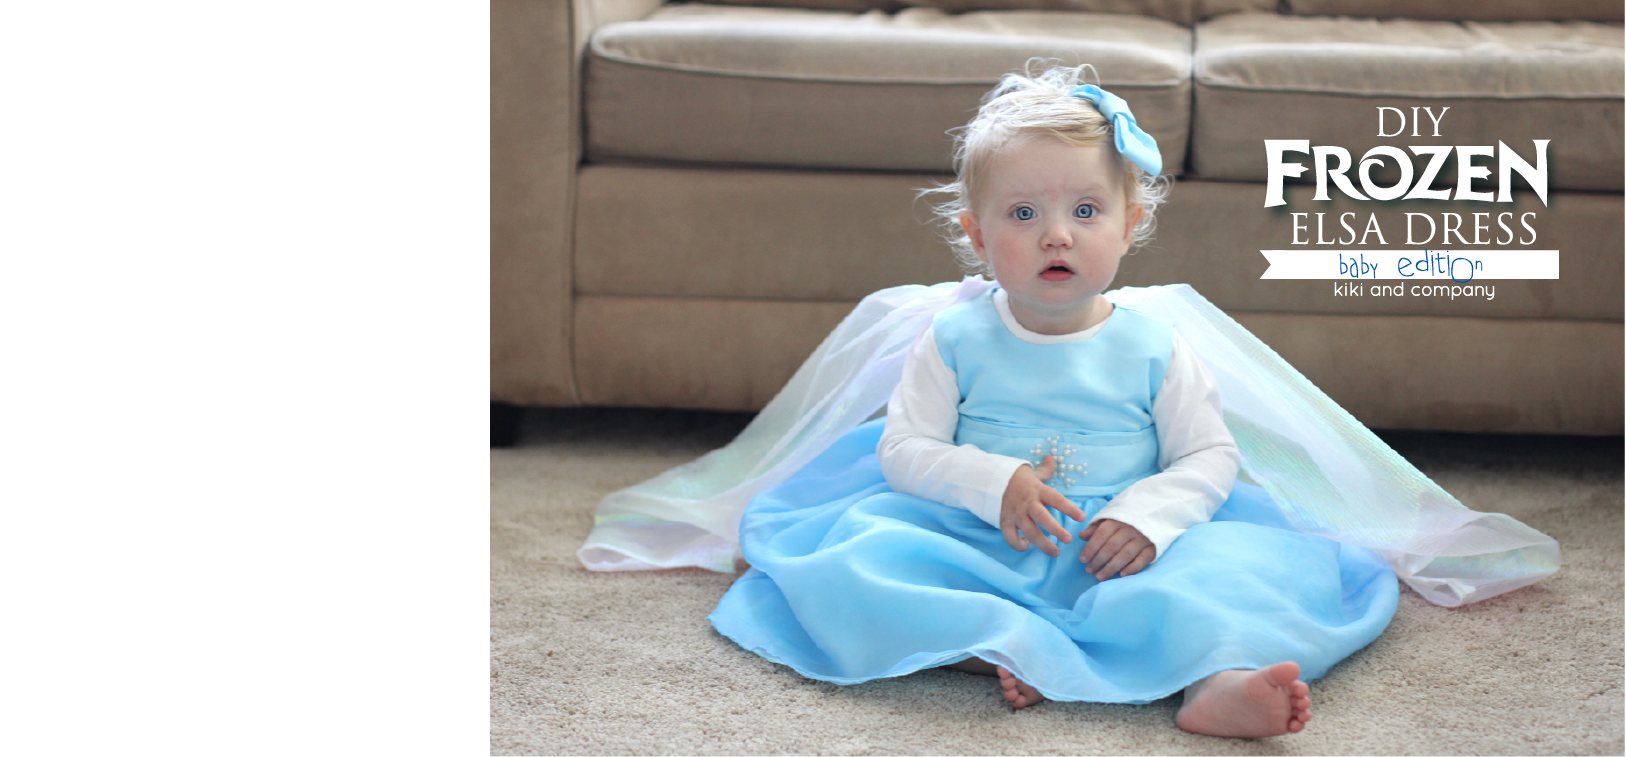 Diy frozen elsa dress baby edition perfect for your littlest princessso adorable